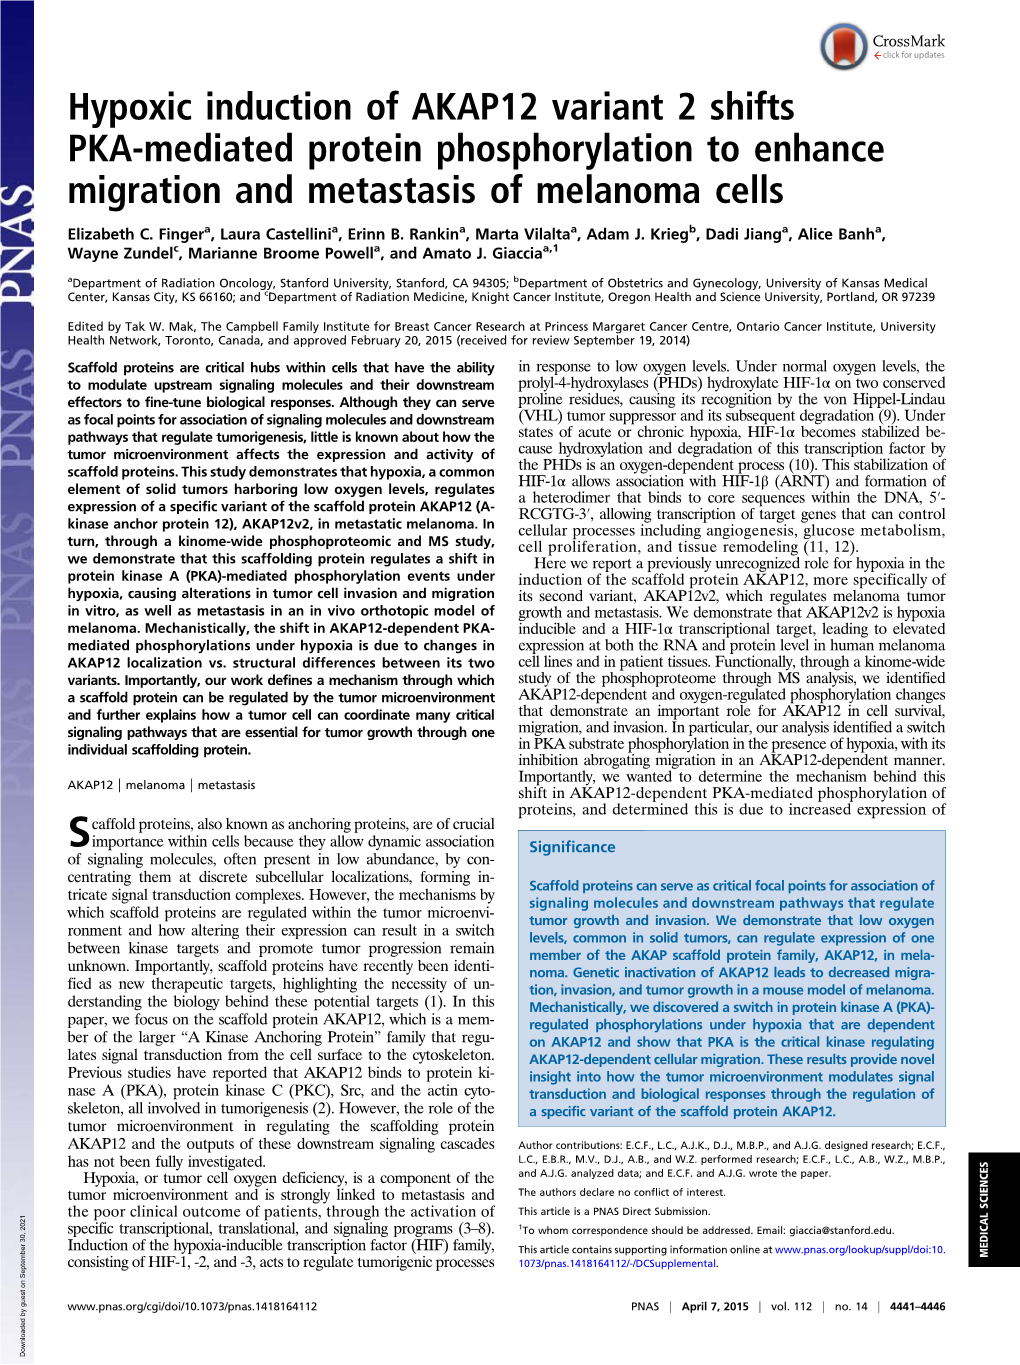 Hypoxic Induction of AKAP12 Variant 2 Shifts PKA-Mediated Protein Phosphorylation to Enhance Migration and Metastasis of Melanoma Cells